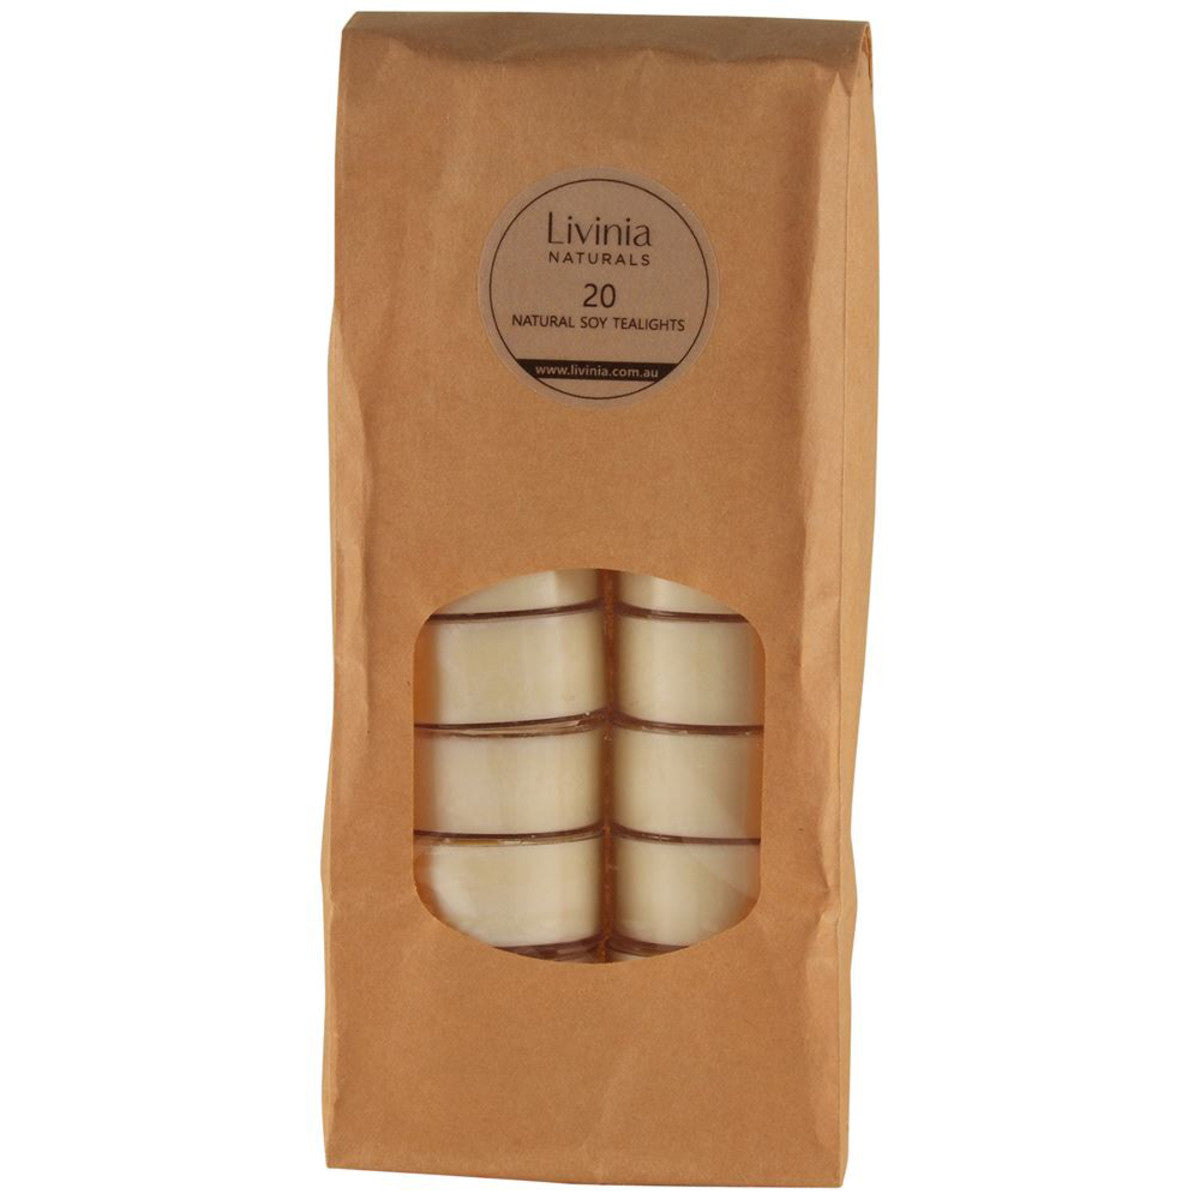 Livinia - Soy Tea Light Candles x 20 Pack